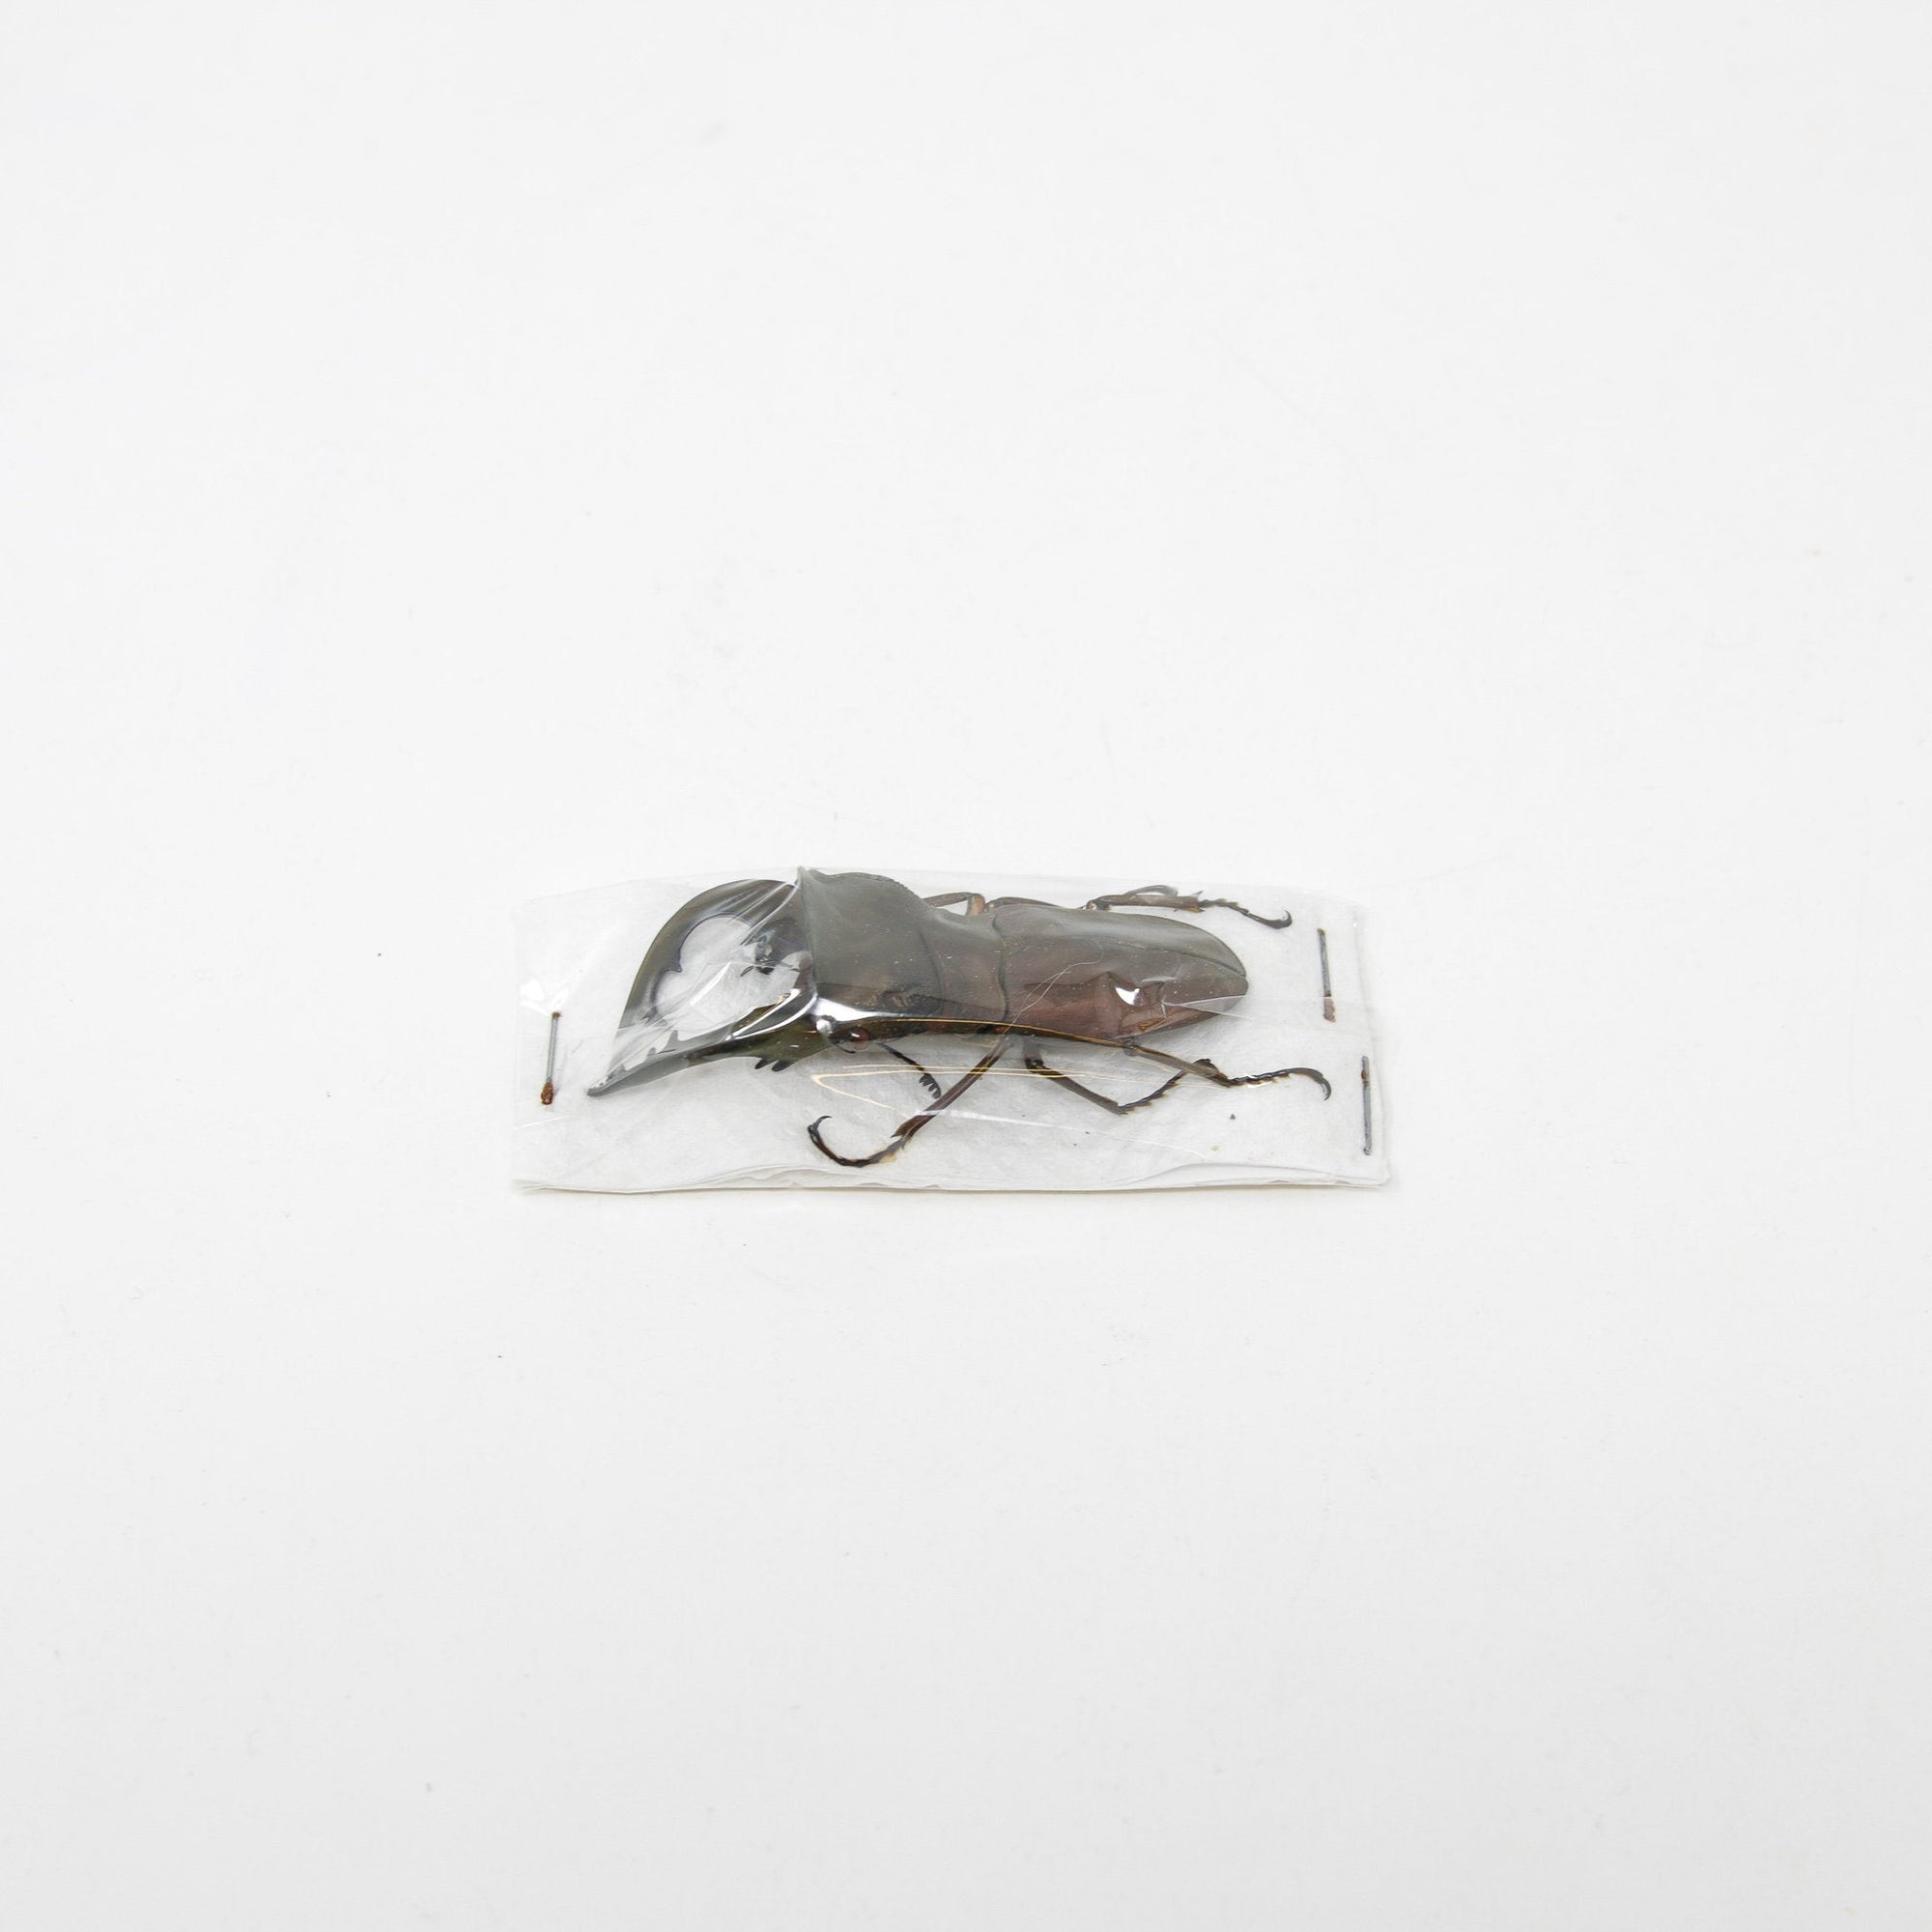 1 x Cyclommatus speciosus 40-50mm | Malaita Is. Solomons Is. 05.2005 | Entomology Specimen and Data